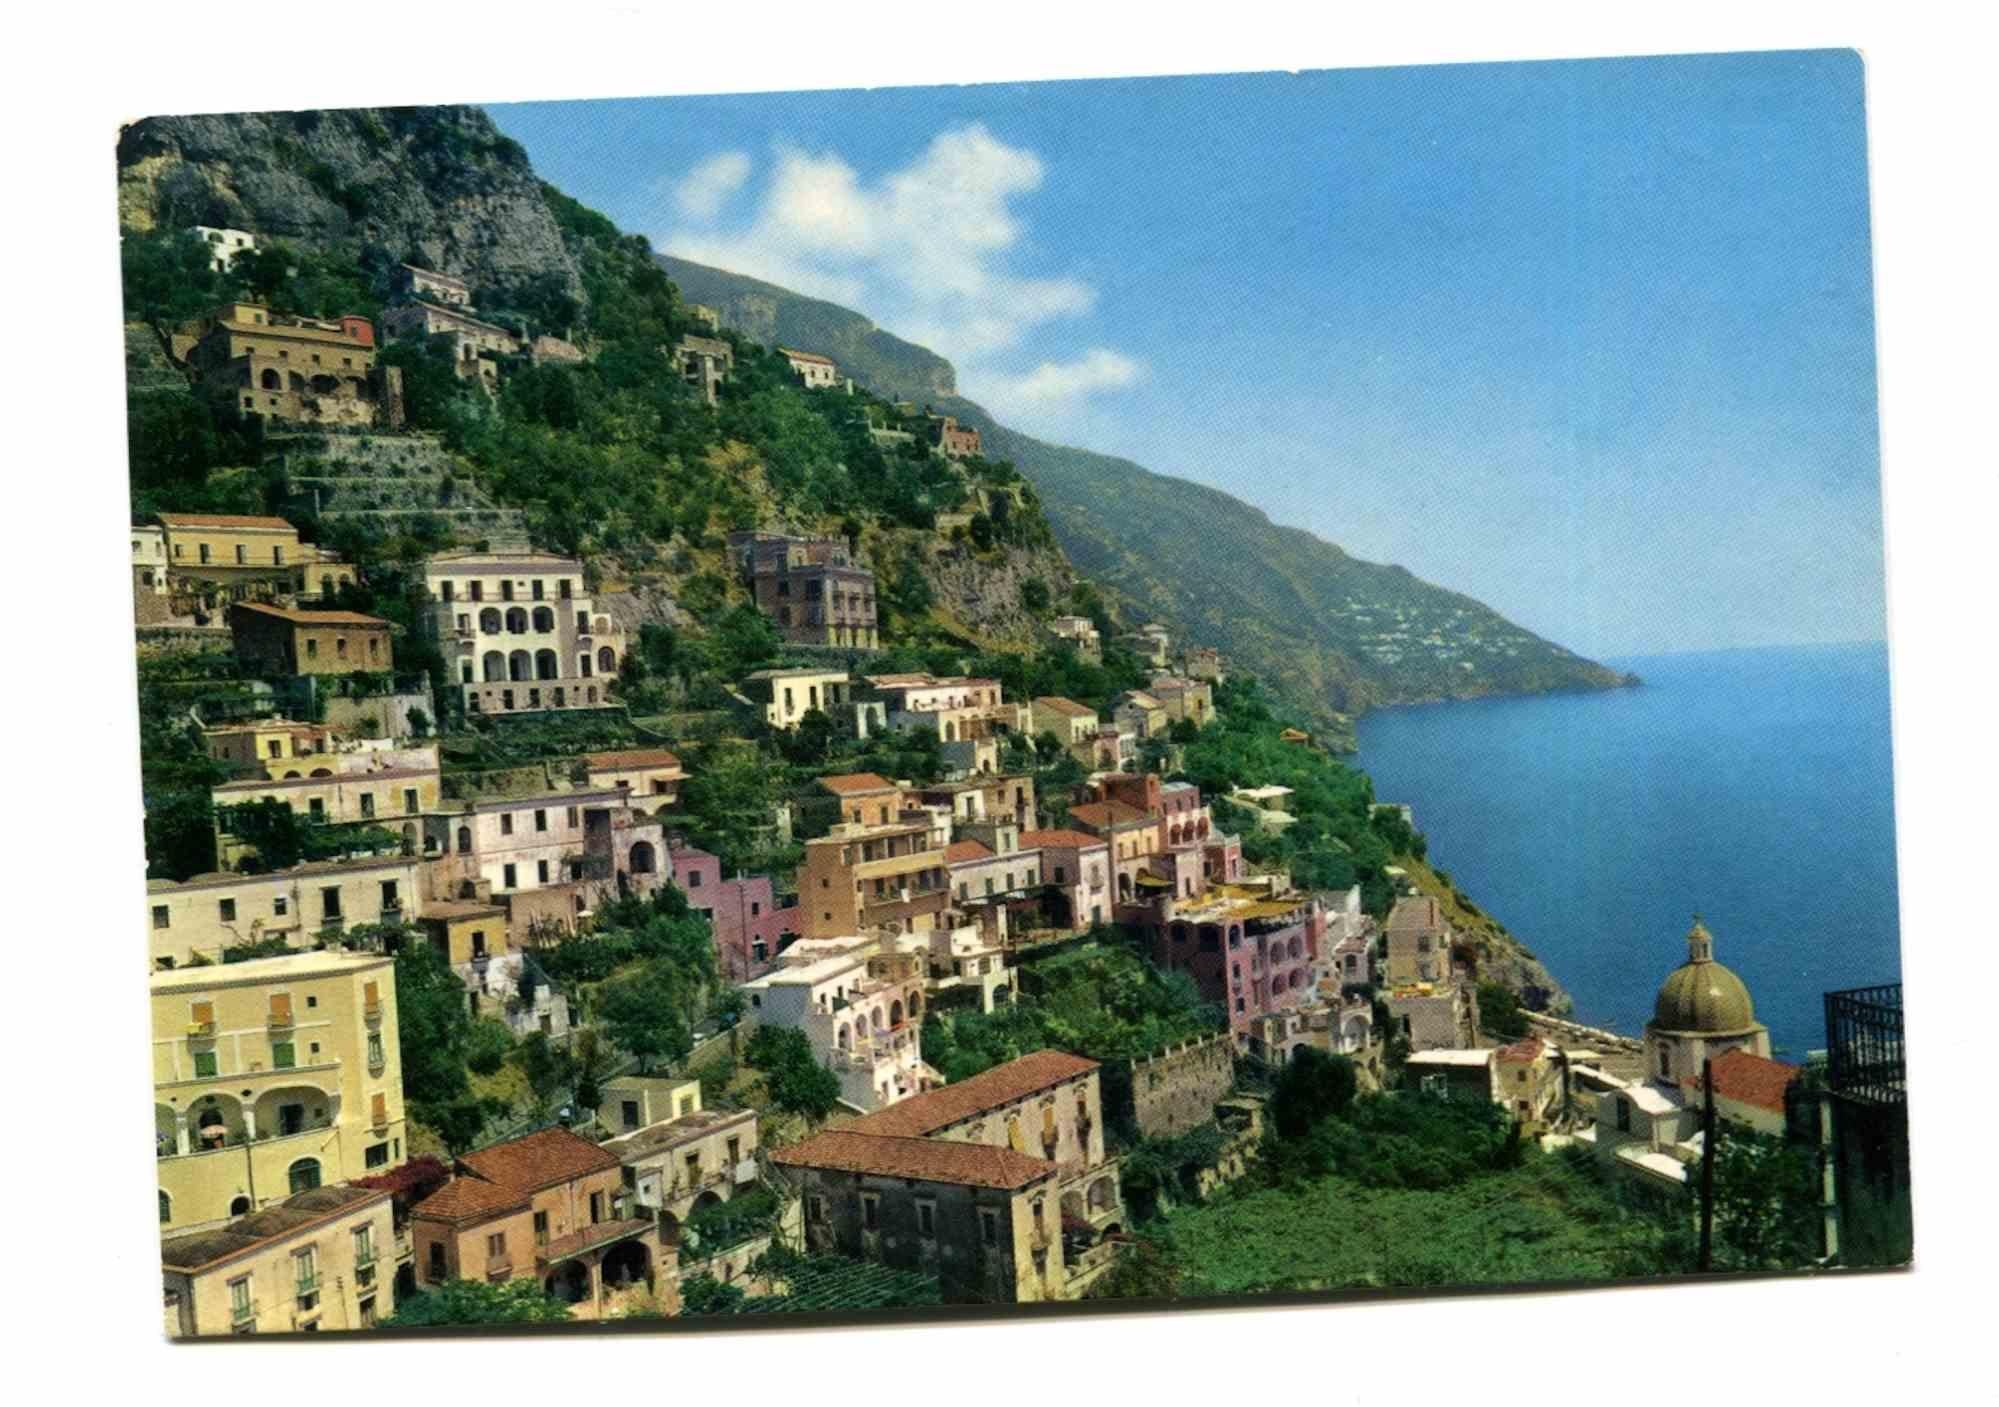 Unknown Portrait Photograph - Landscape - View of Positano - Vintage Photo - Mid-20th Century 